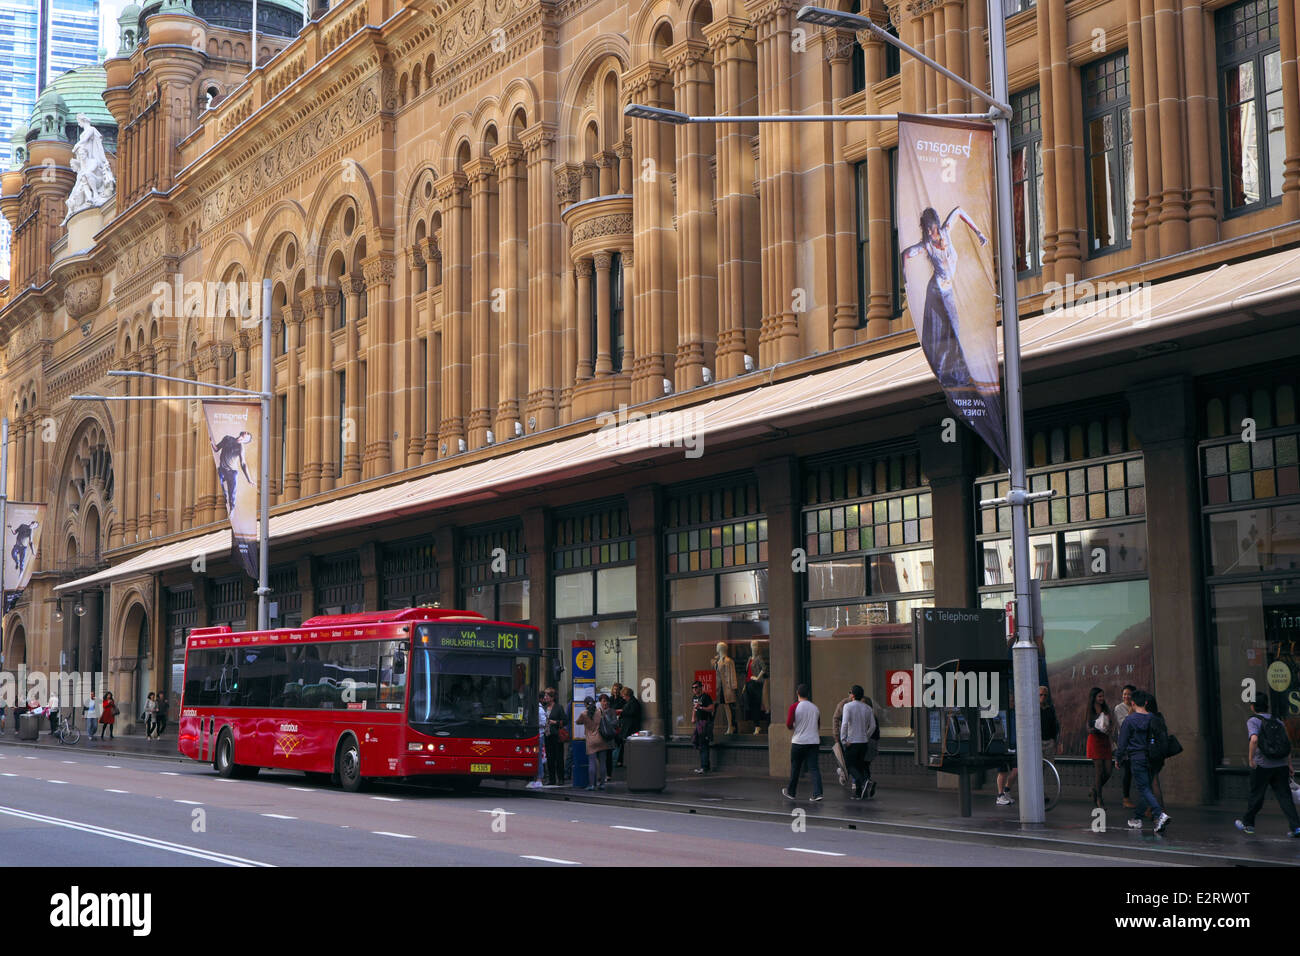 Queen victoria building and sydney bus on sydney's george street,sydney,australia Stock Photo